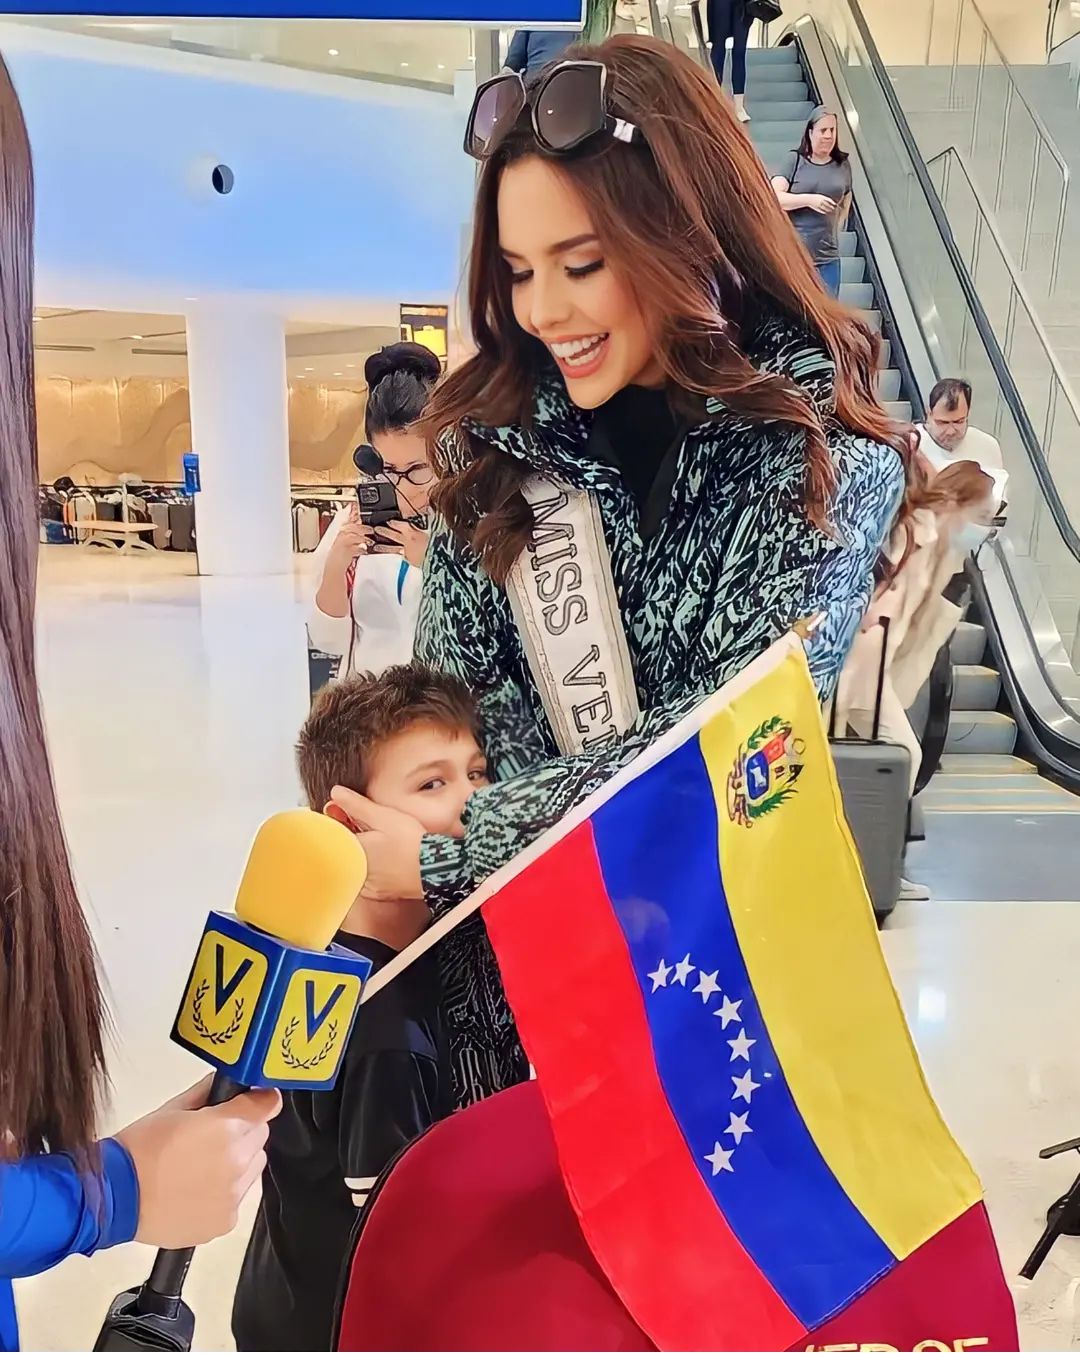 MissVenezuela2021 - amanda dudamel newman, 1st runner-up de miss universe 2022. - Página 16 33000113